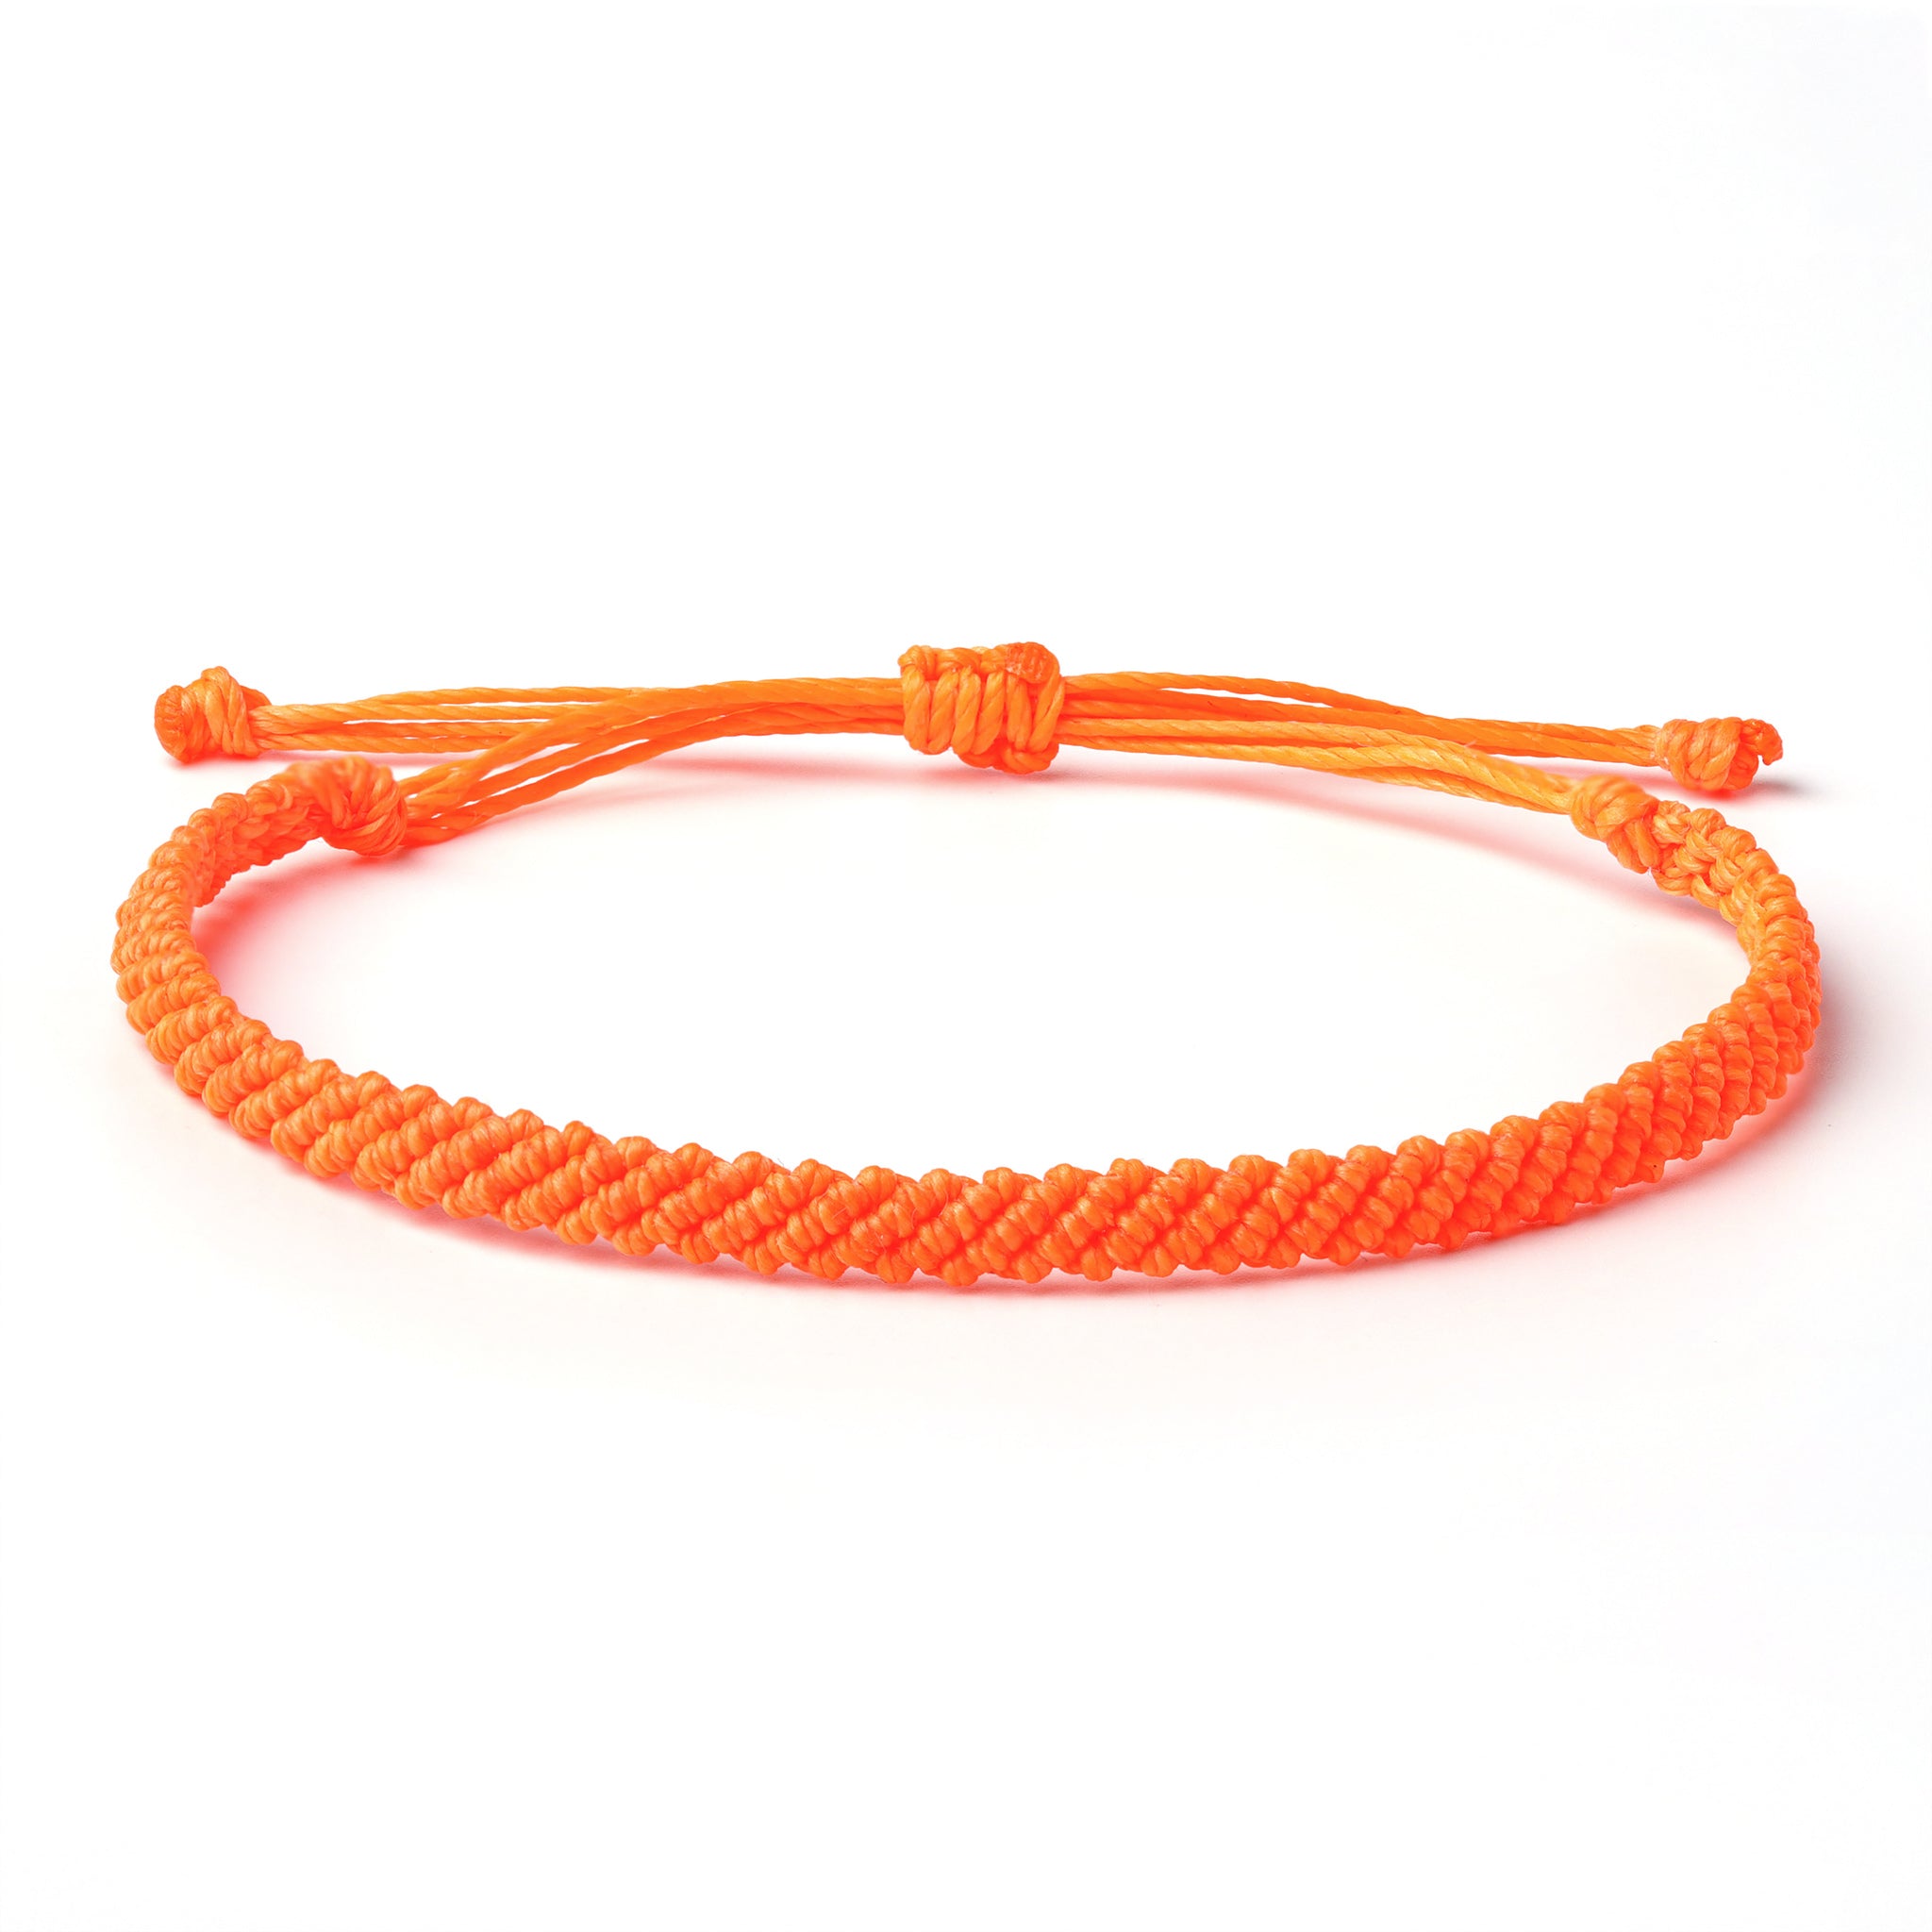 Purchase FRED Force 10 bracelet, medium size, white gold manilla, fluorescent  orange rope cord